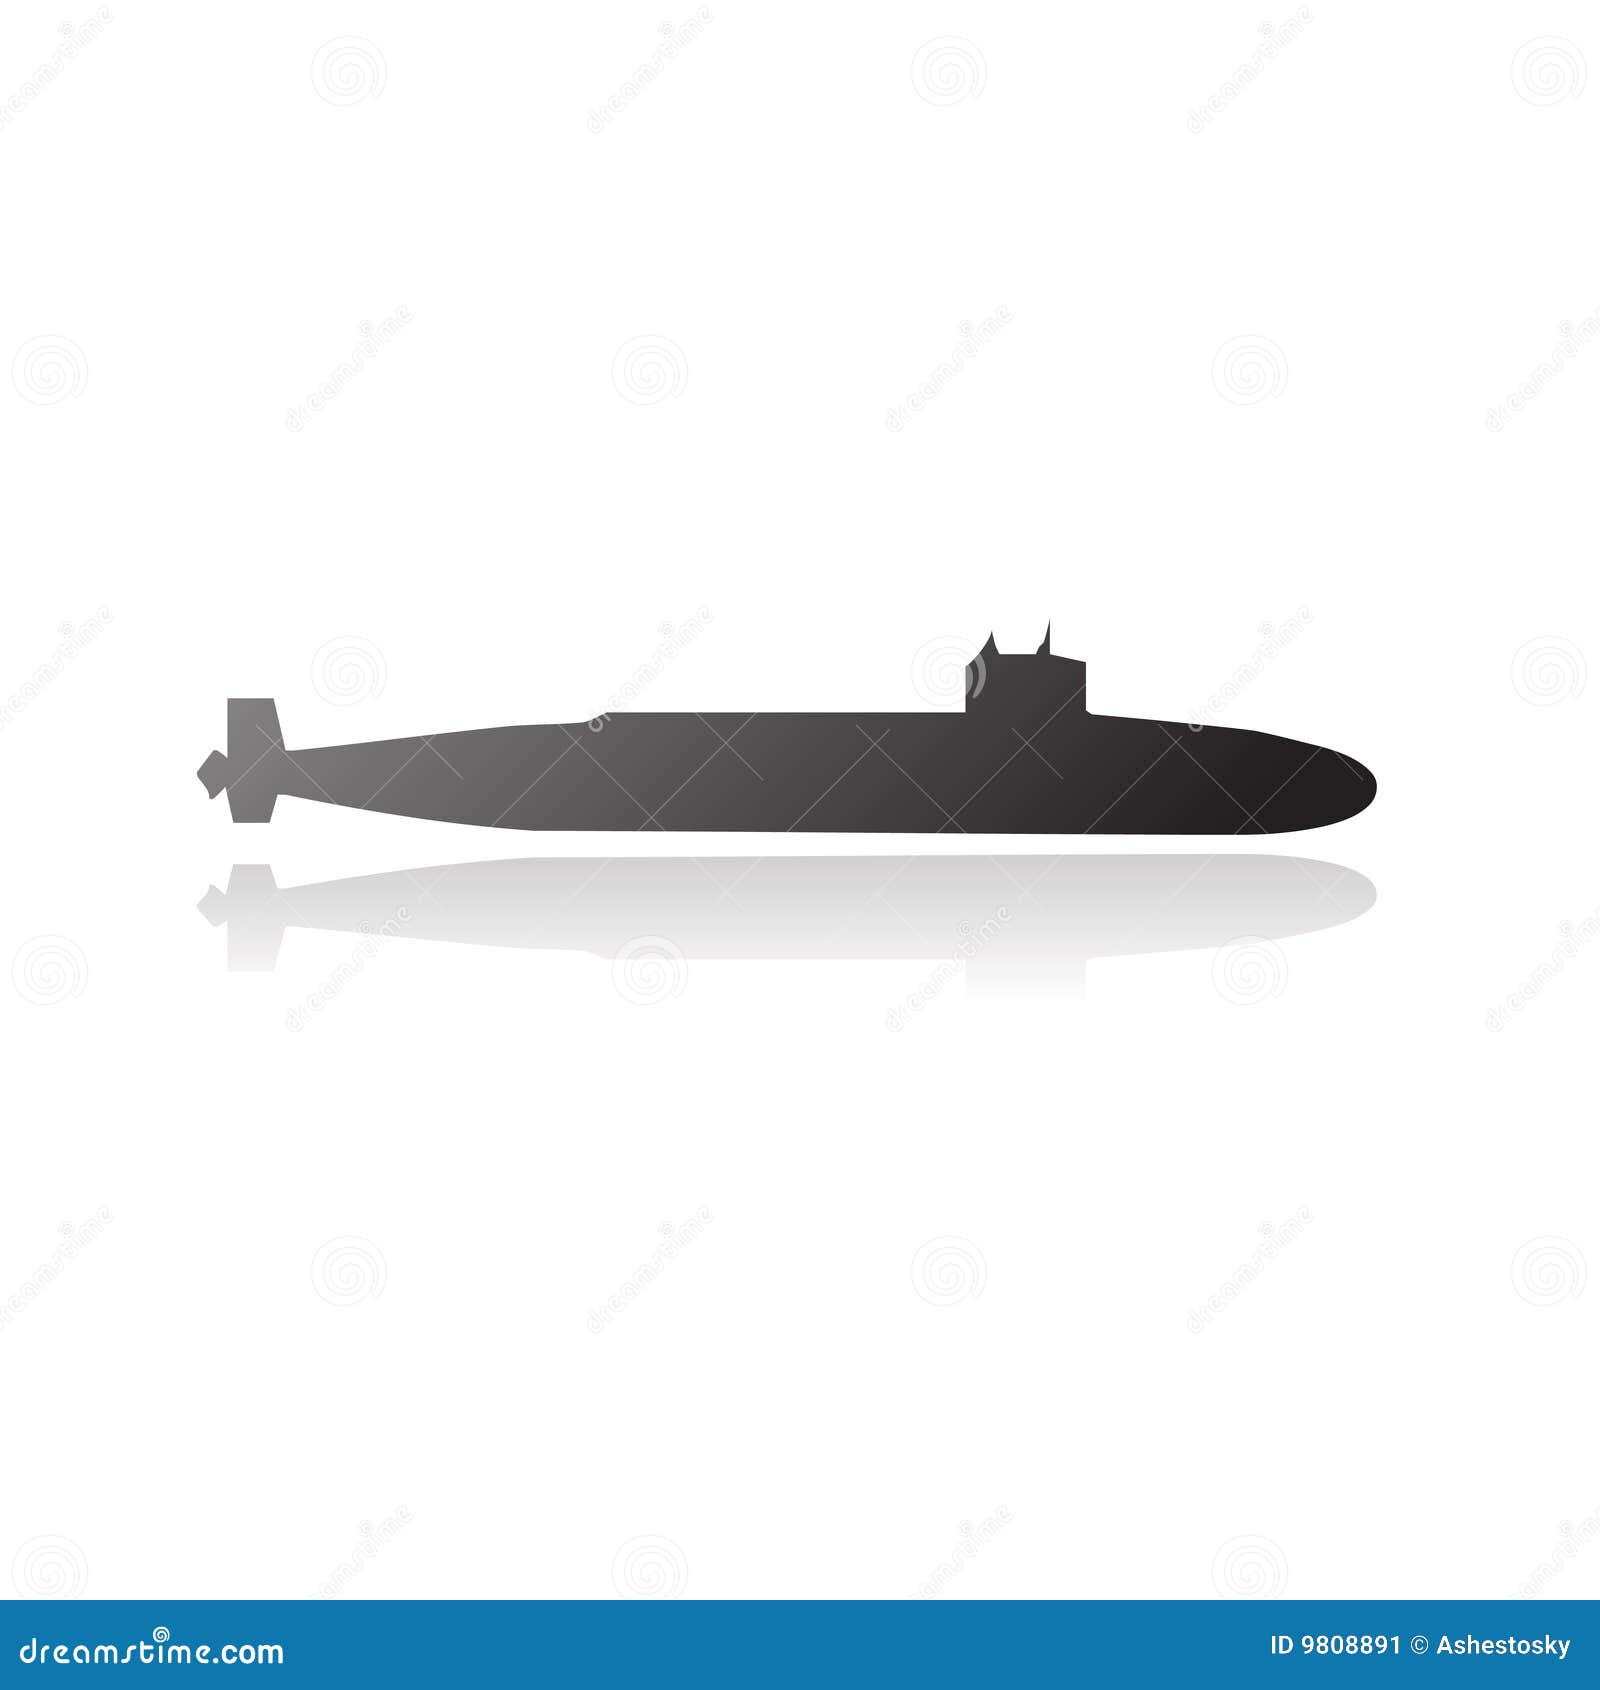  nuclear submarine silhouette